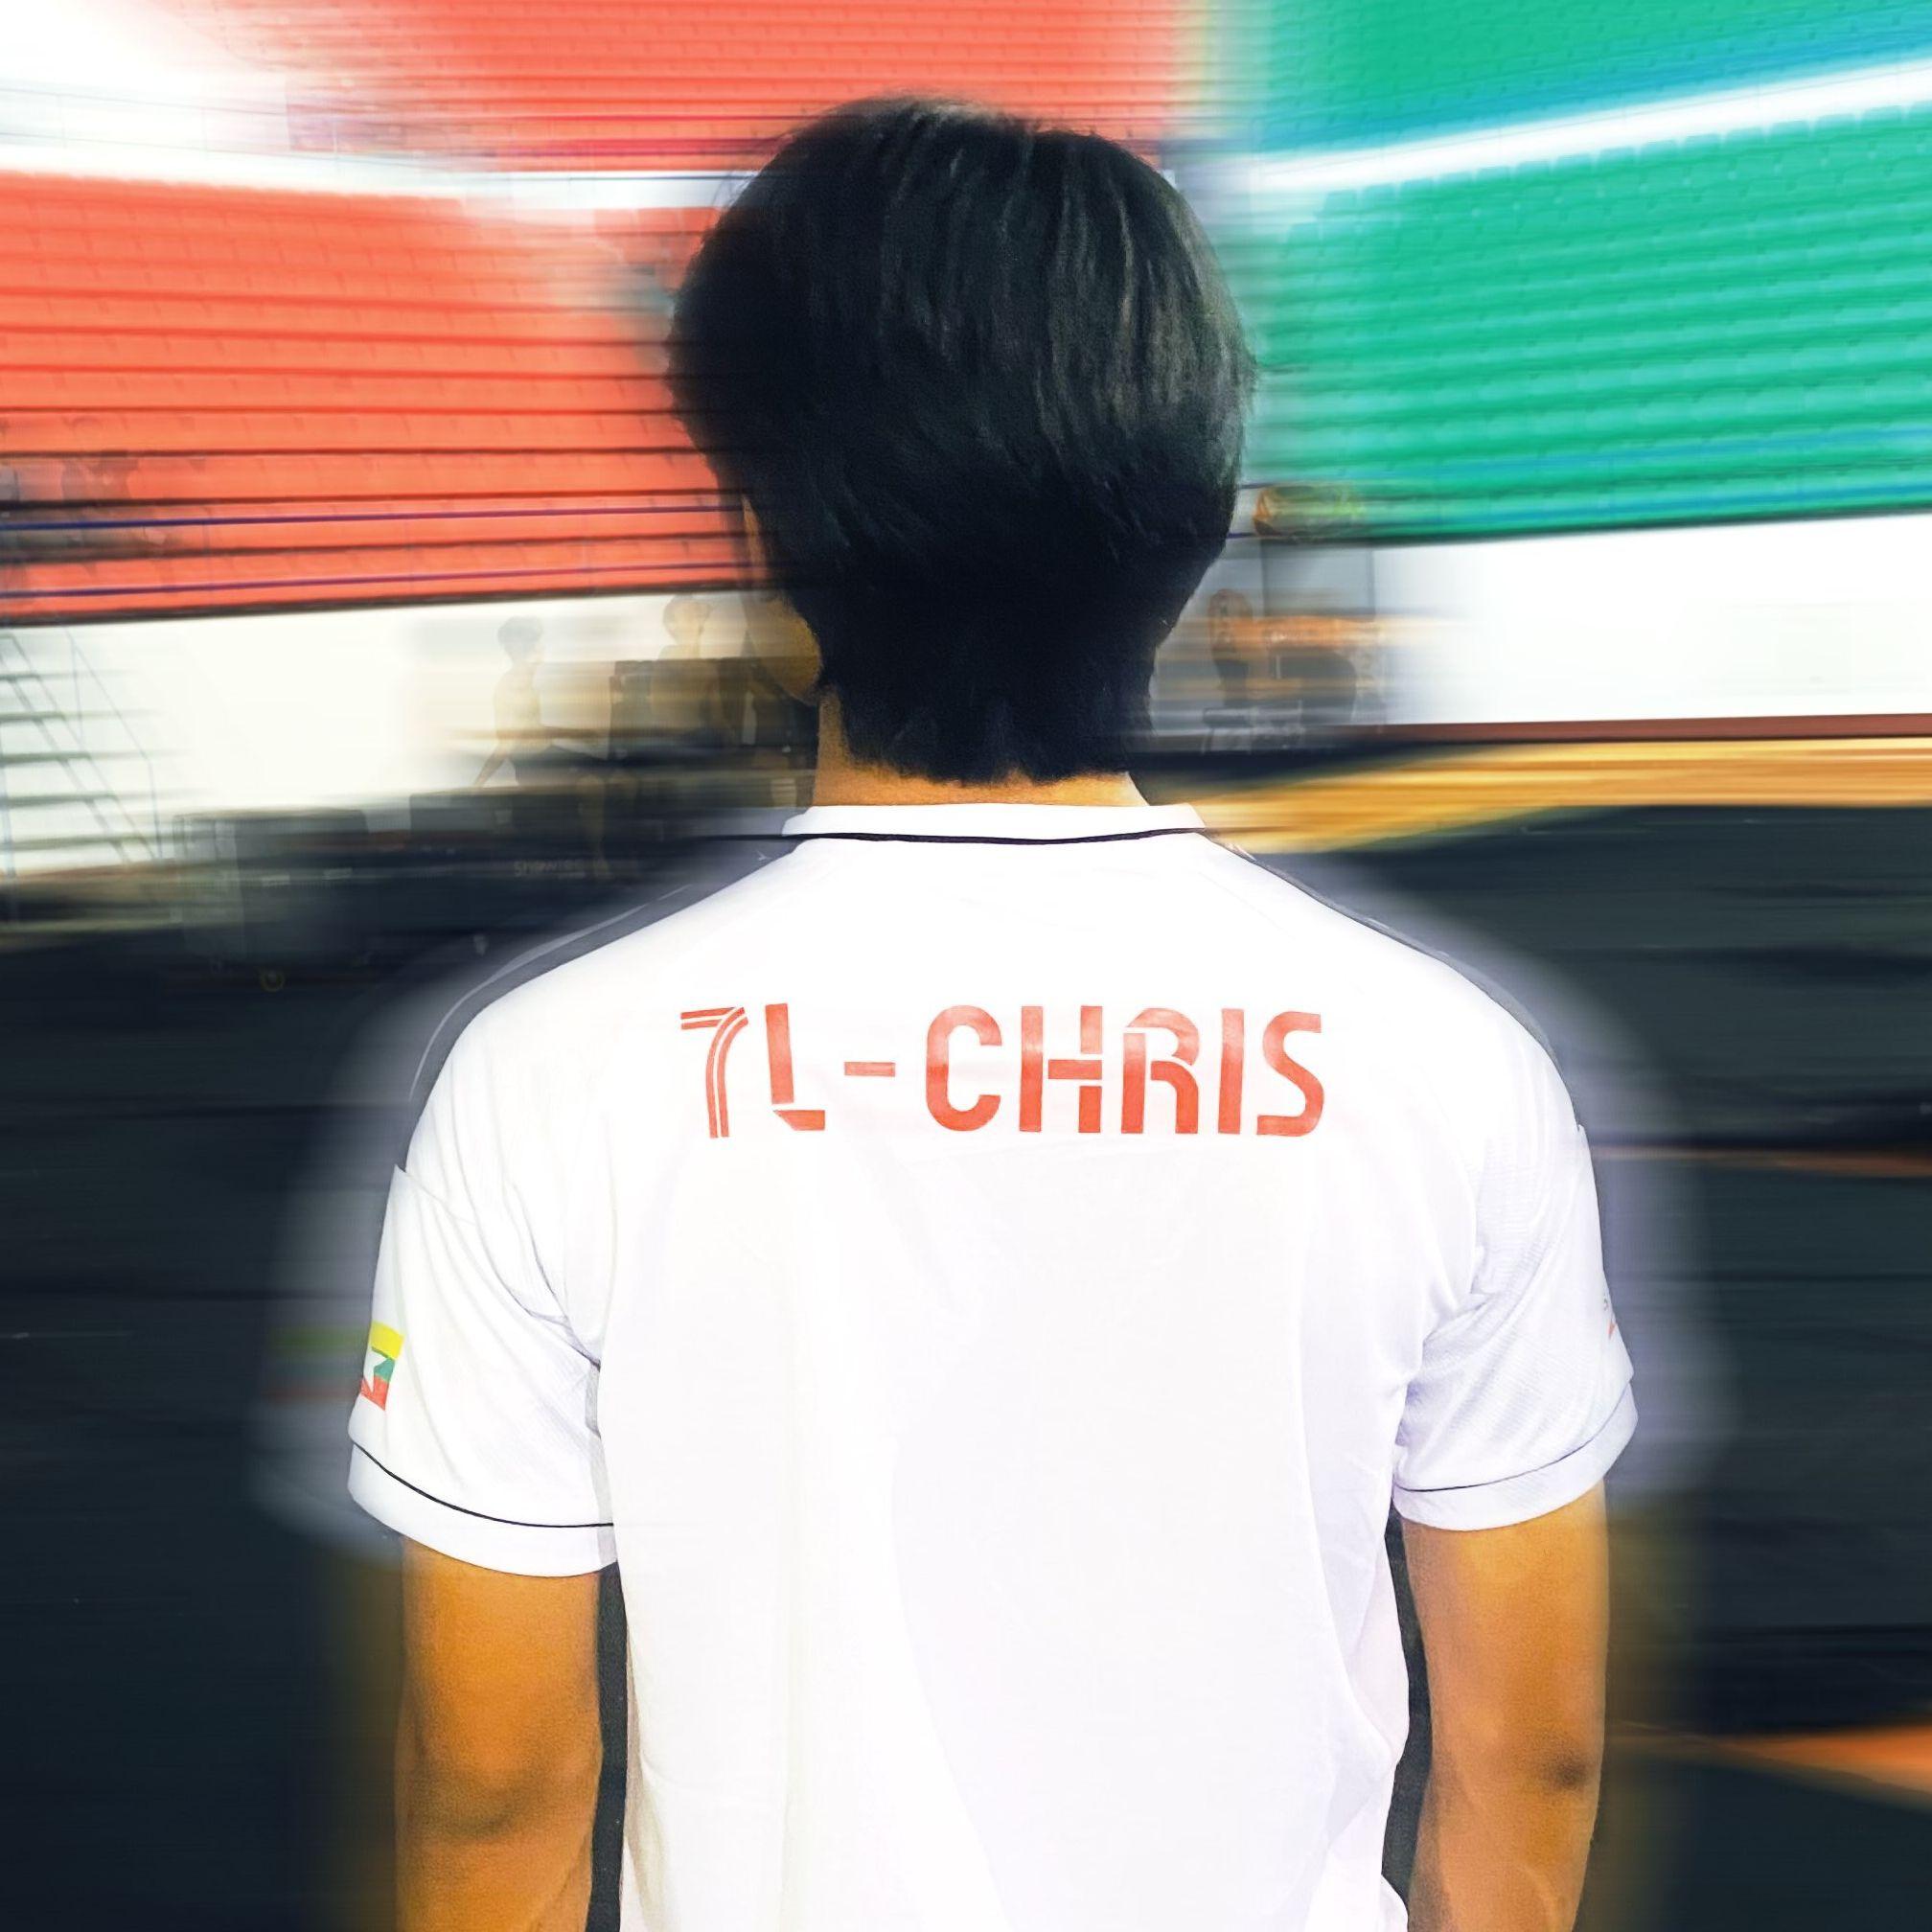 Player 7L_CHRIS avatar